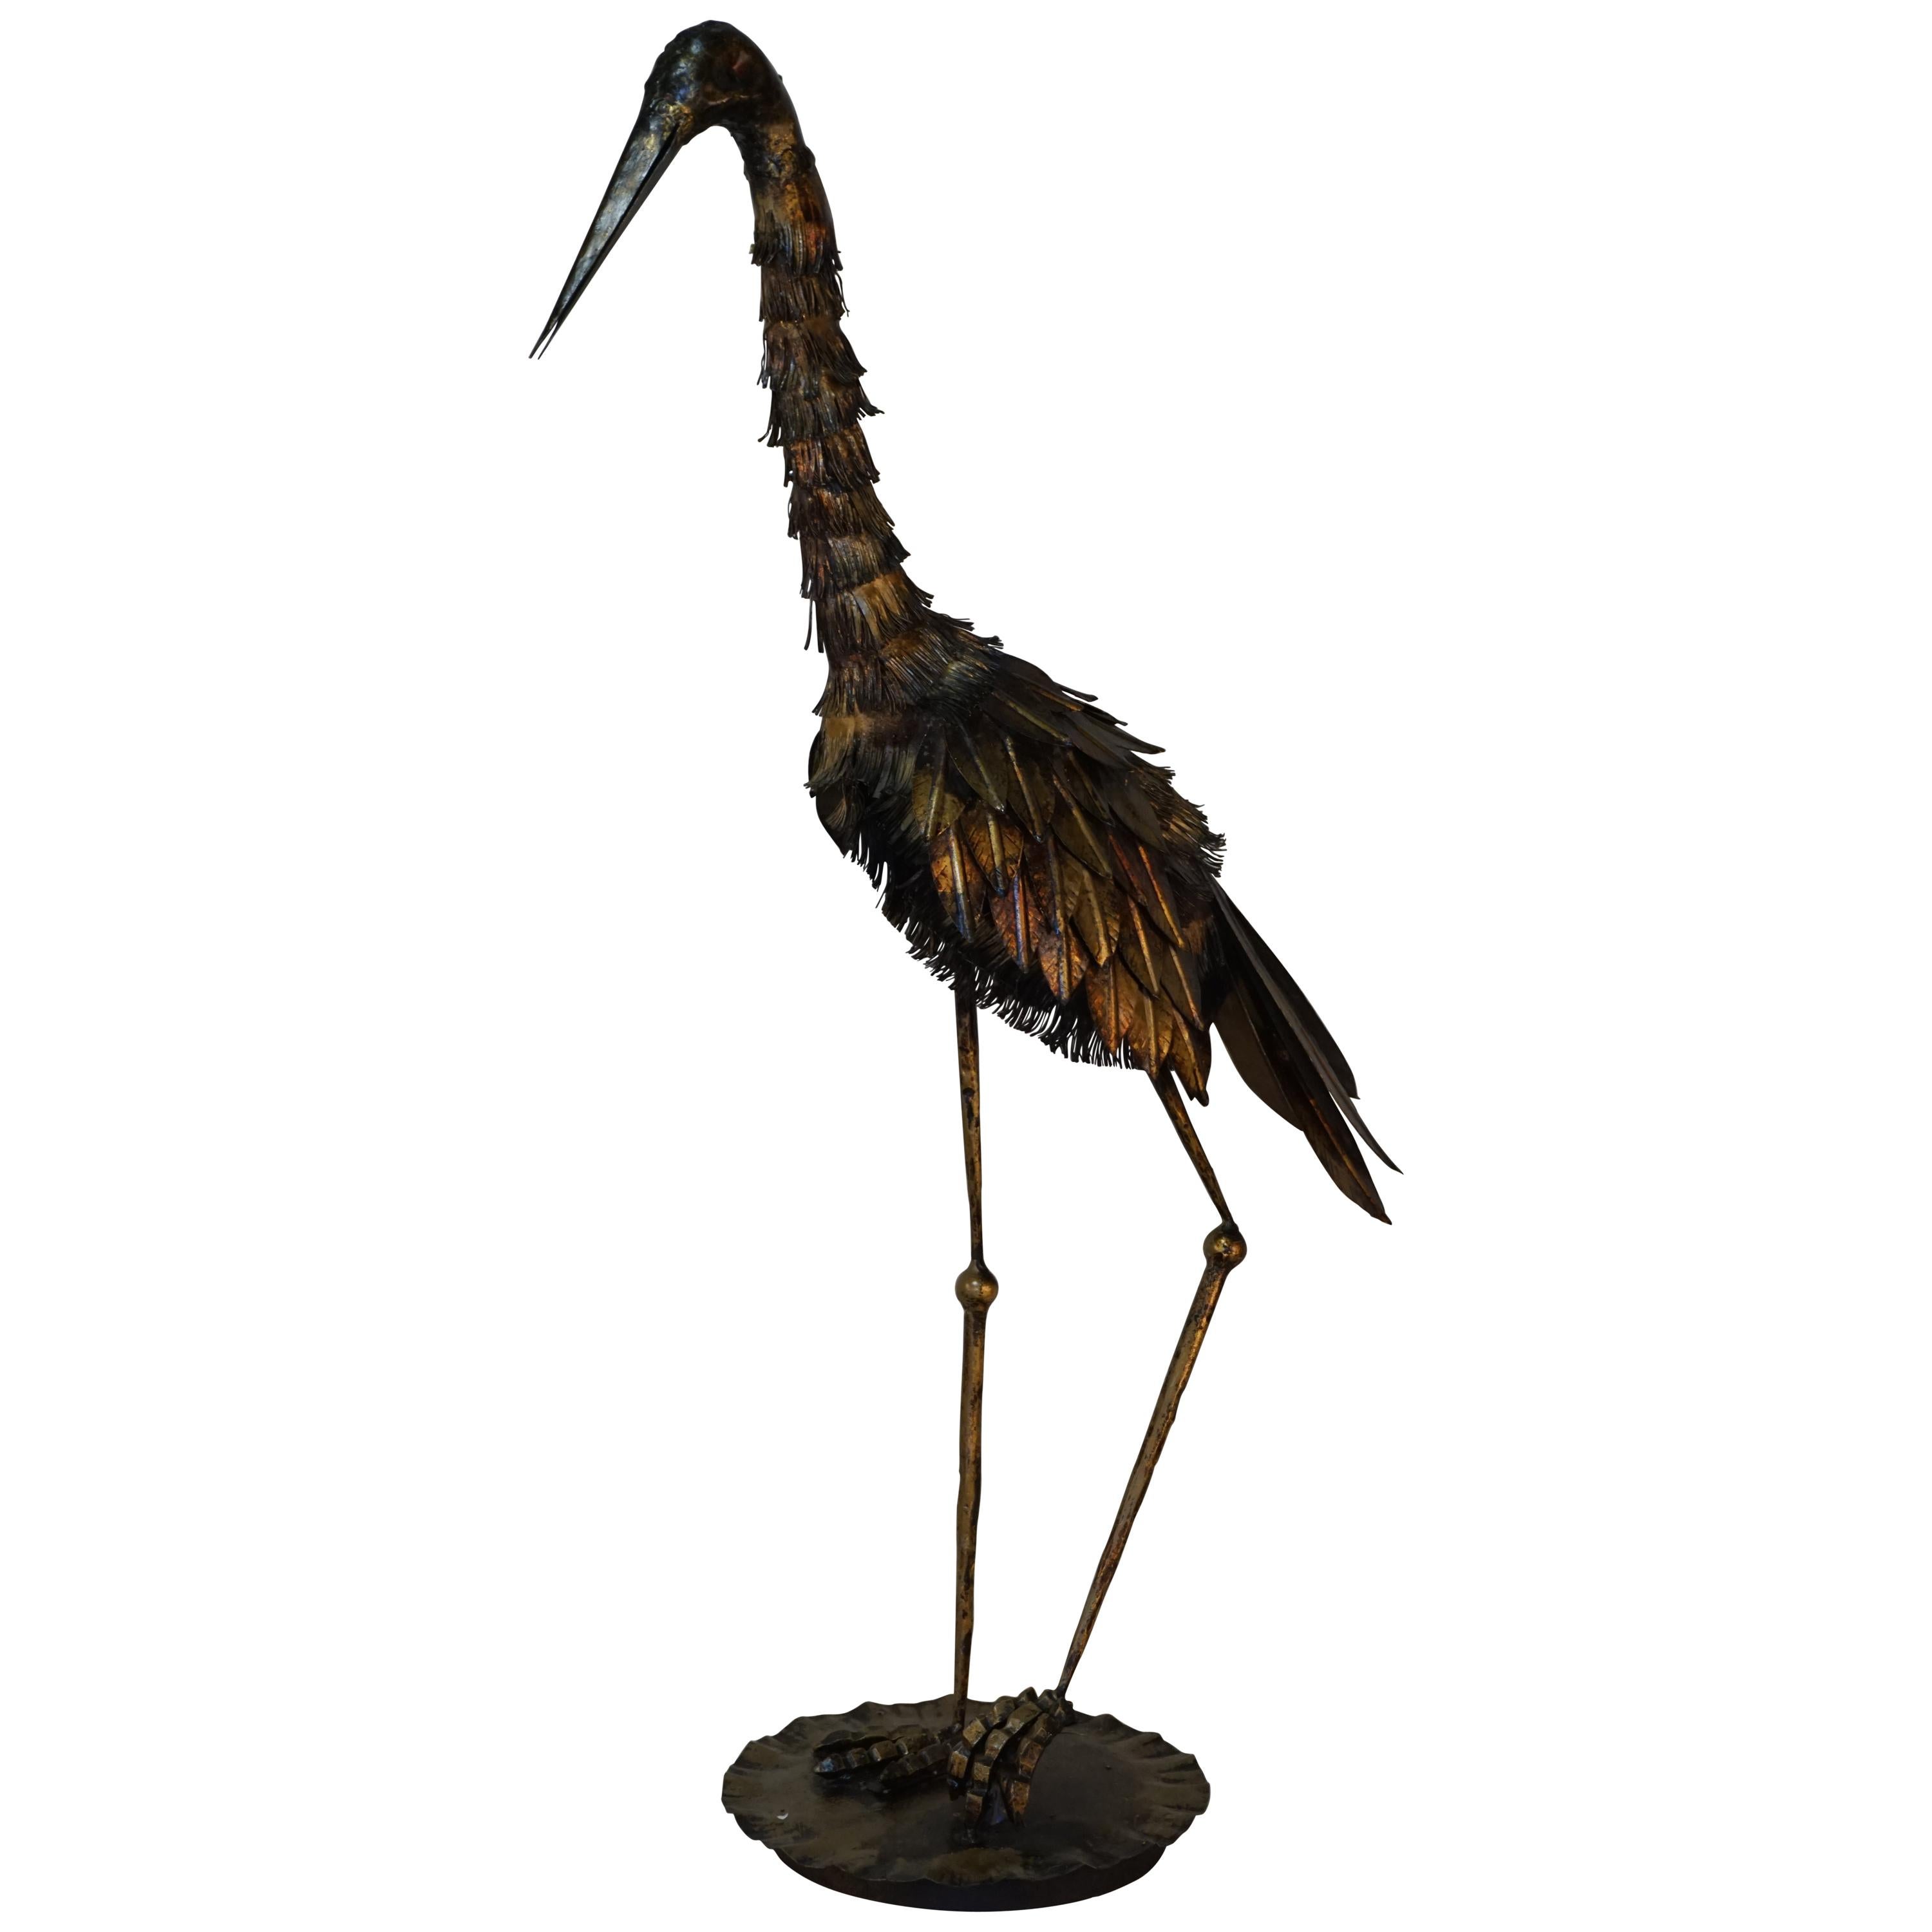 Spanish Iron Sculpture of Long Legged Bird